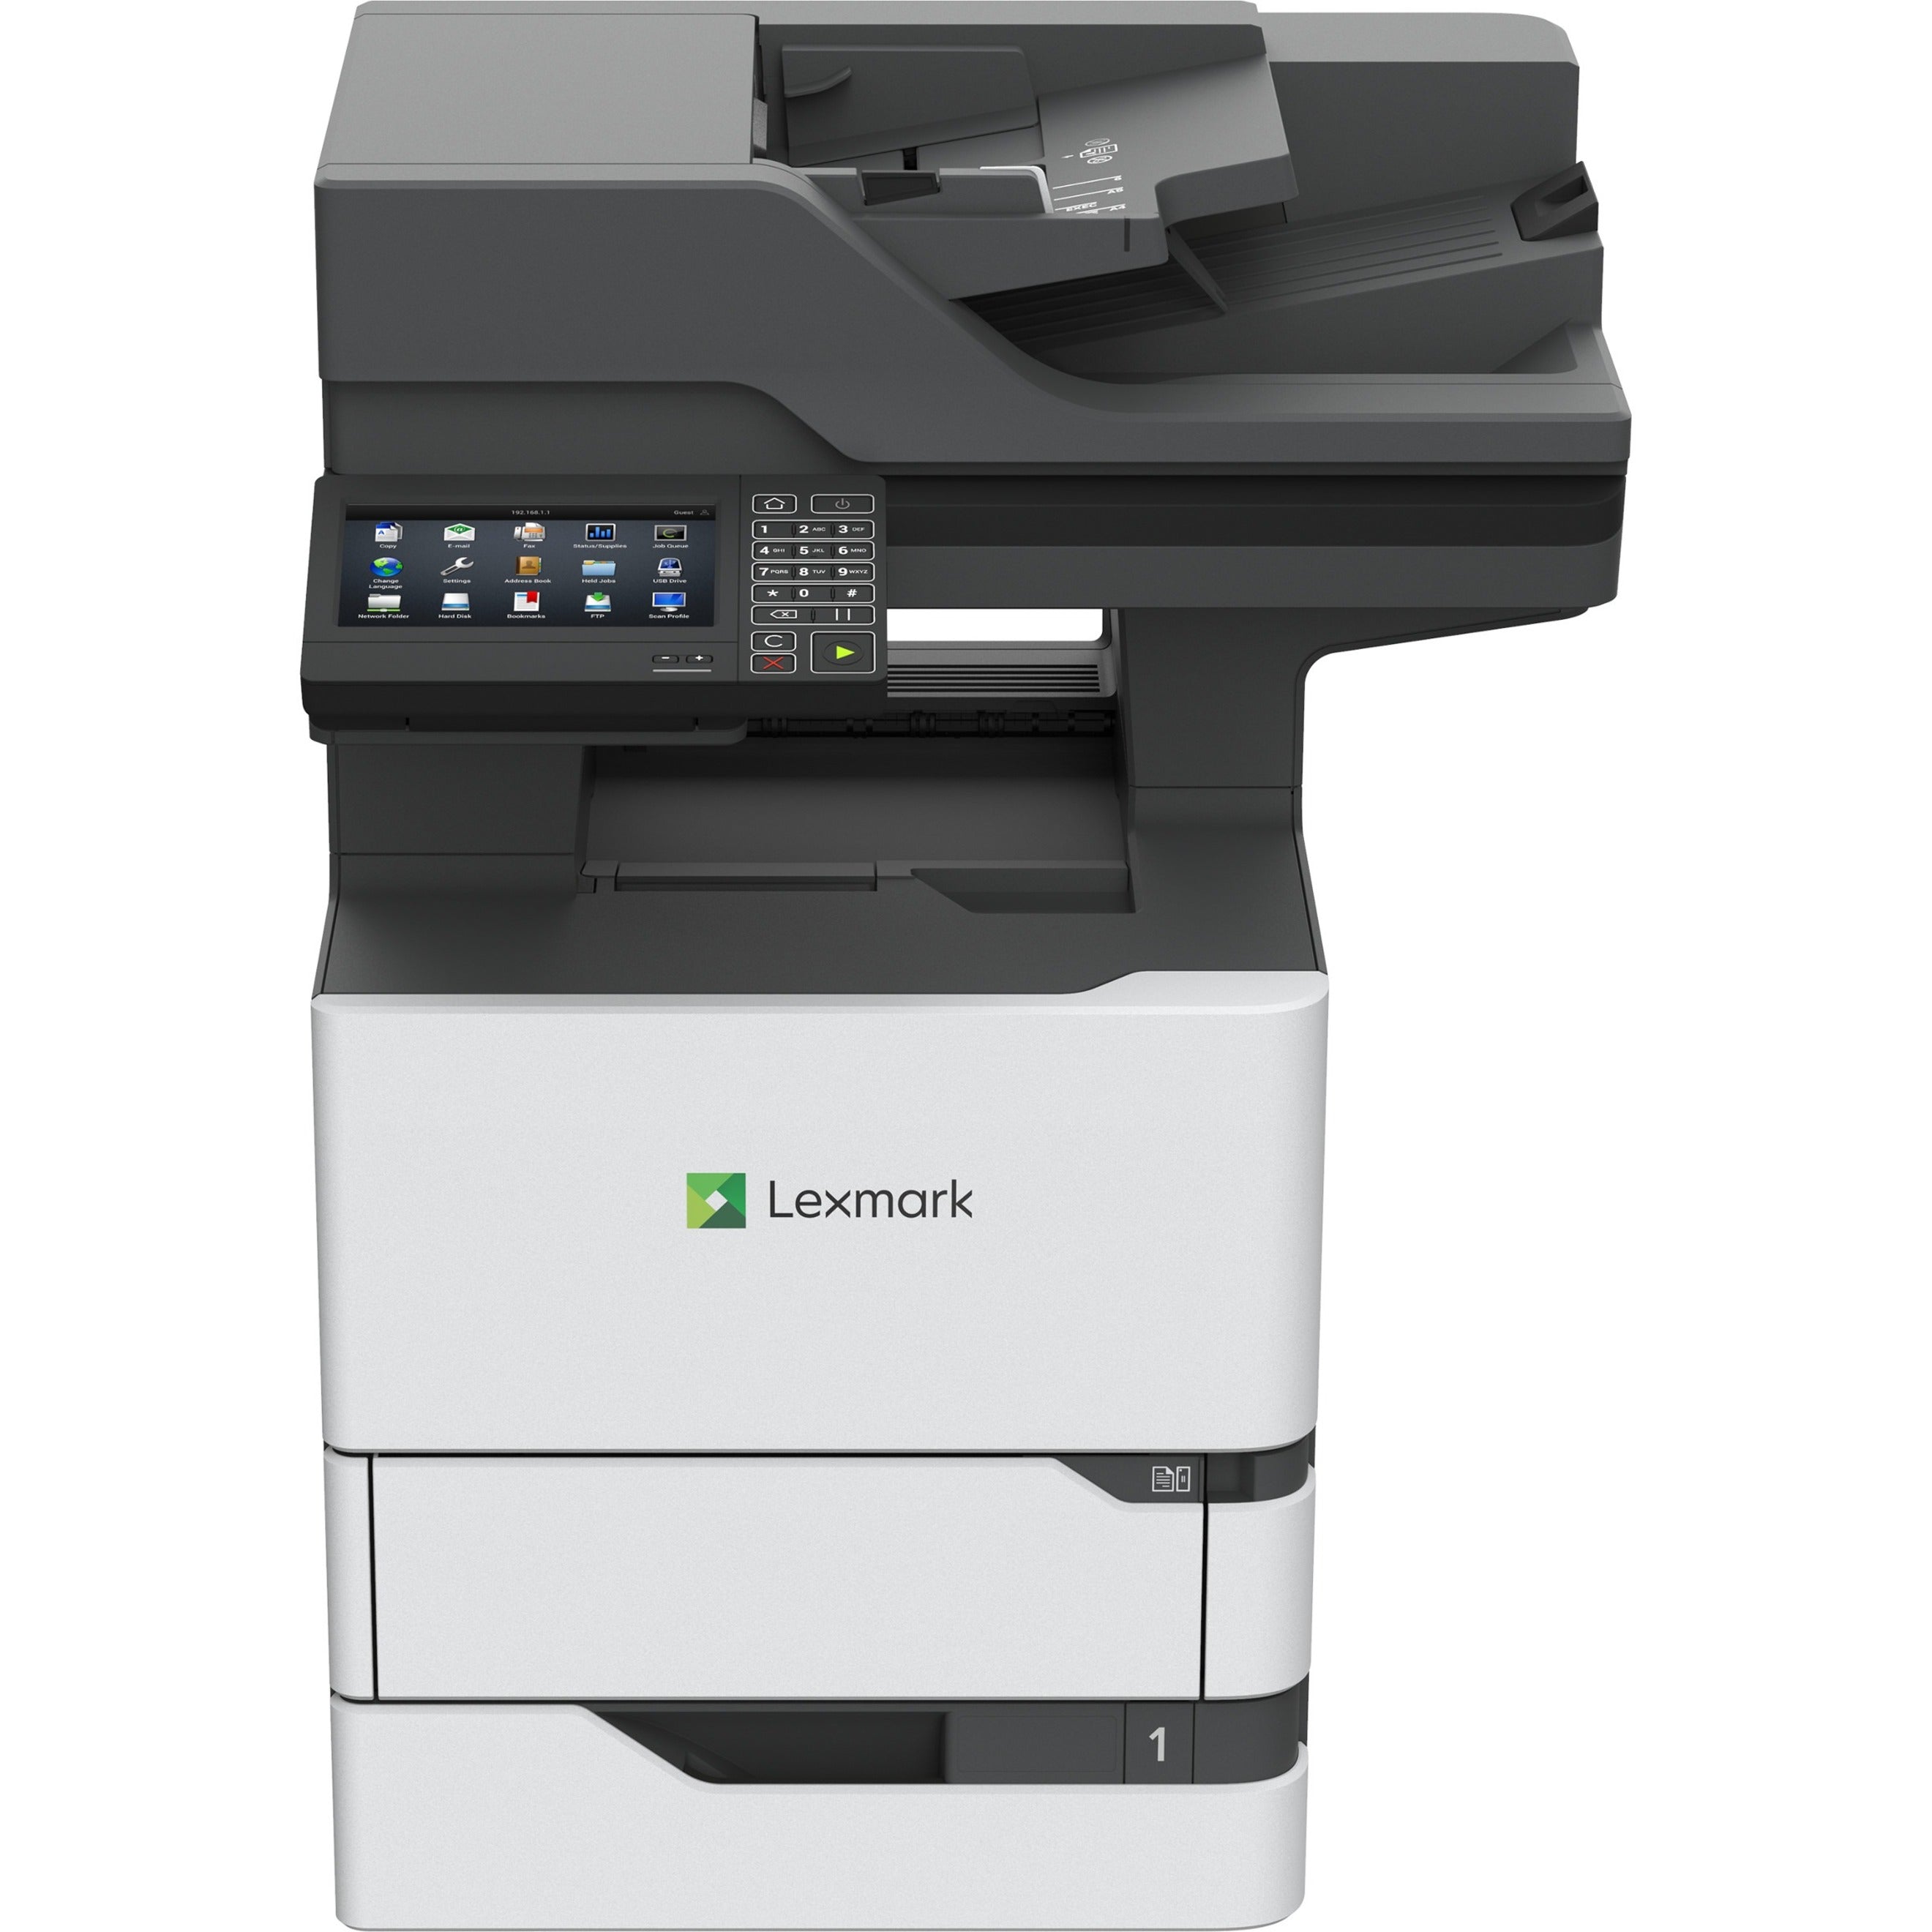 Lexmark 25BT017 MX722ade Laser Multifunction Printer, Monochrome, 70 ppm, 1200 x 1200 dpi